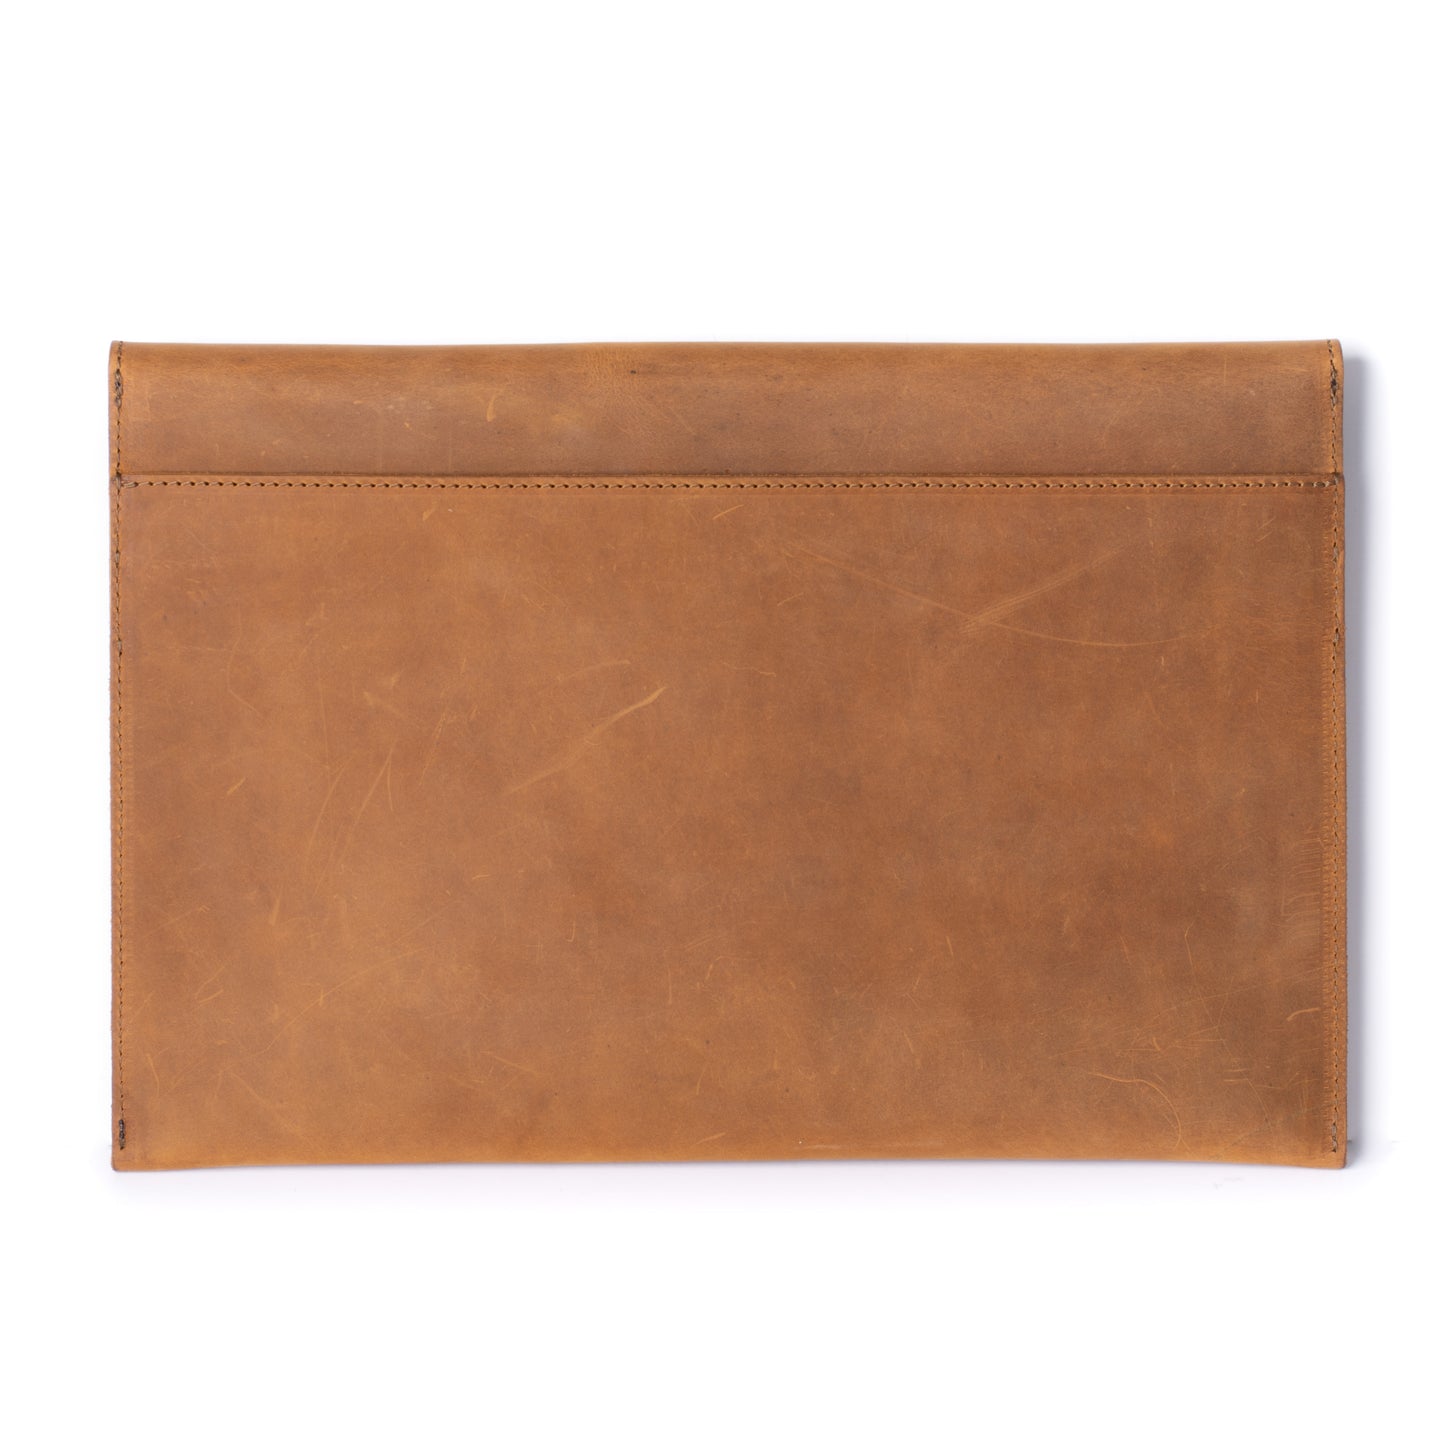 Leather iPad Pro Envelope Case - Tobacco